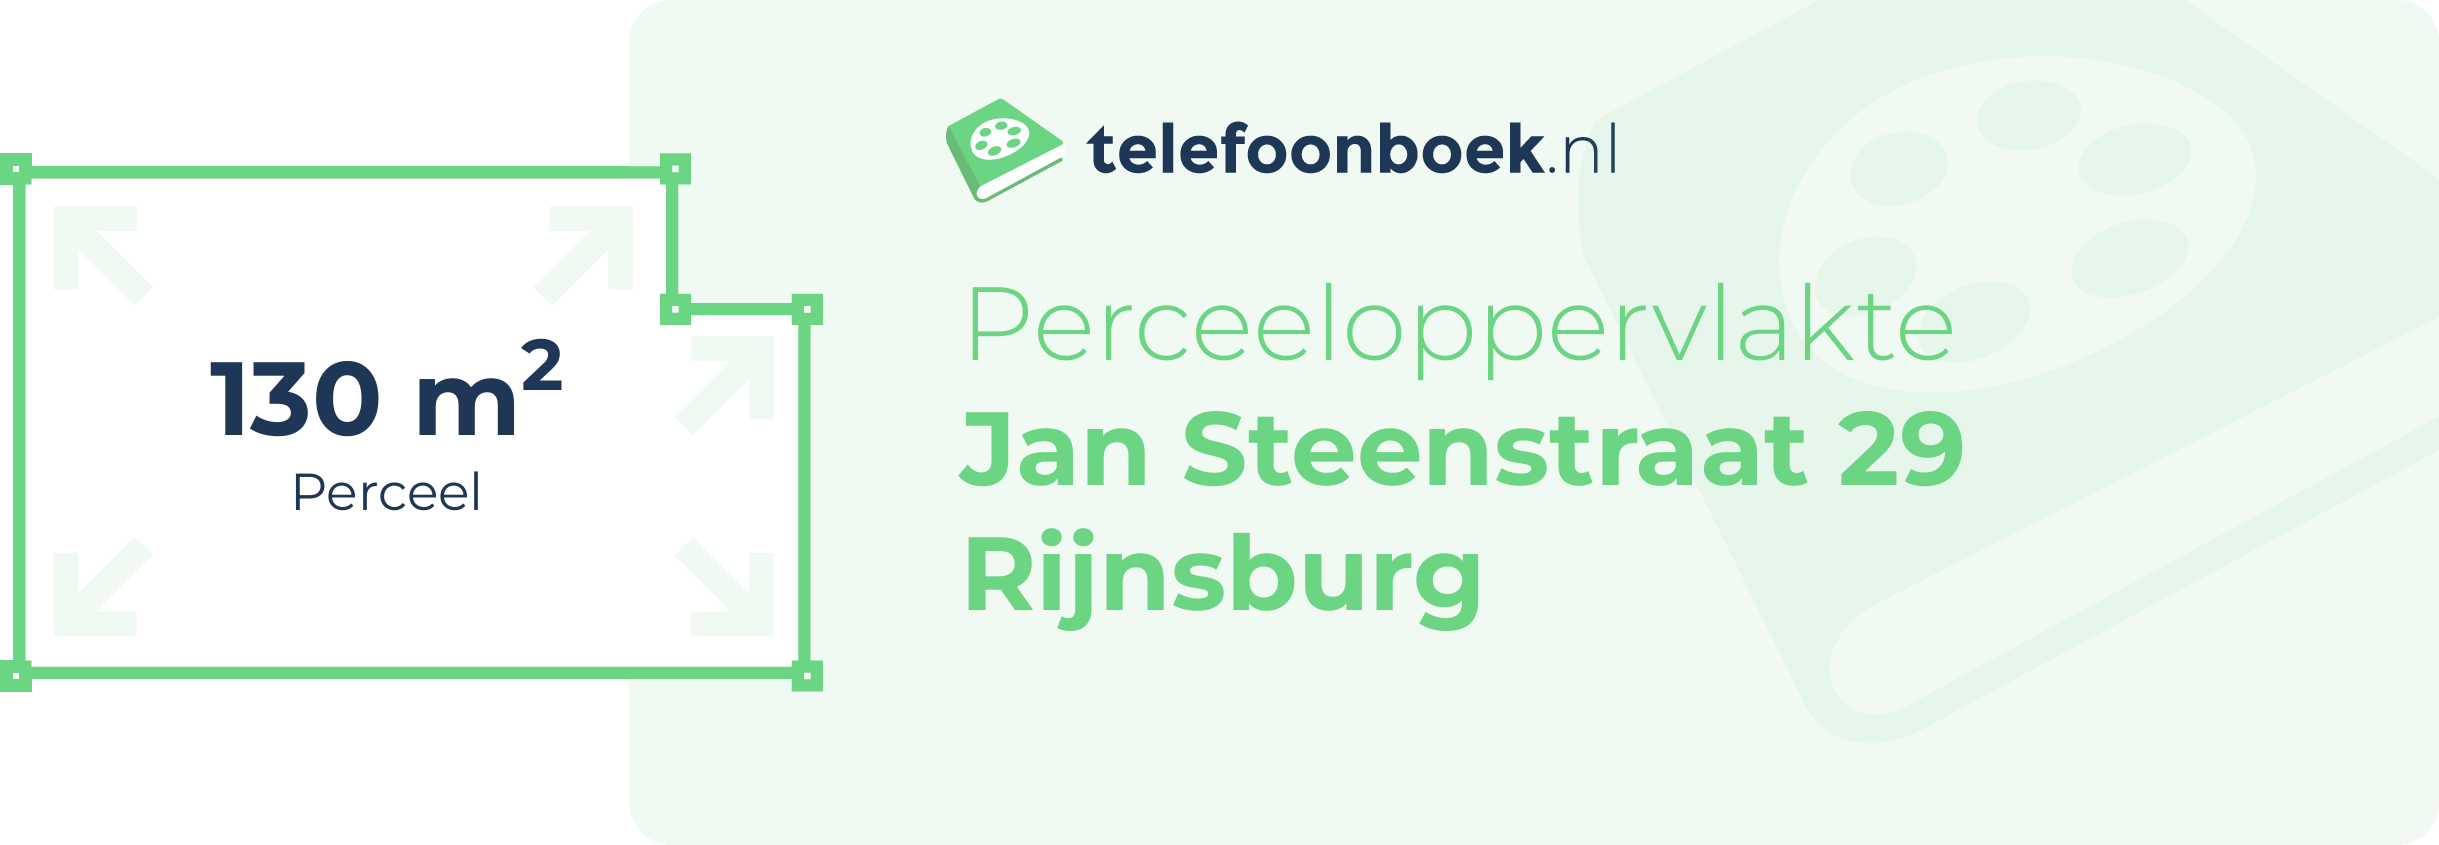 Perceeloppervlakte Jan Steenstraat 29 Rijnsburg